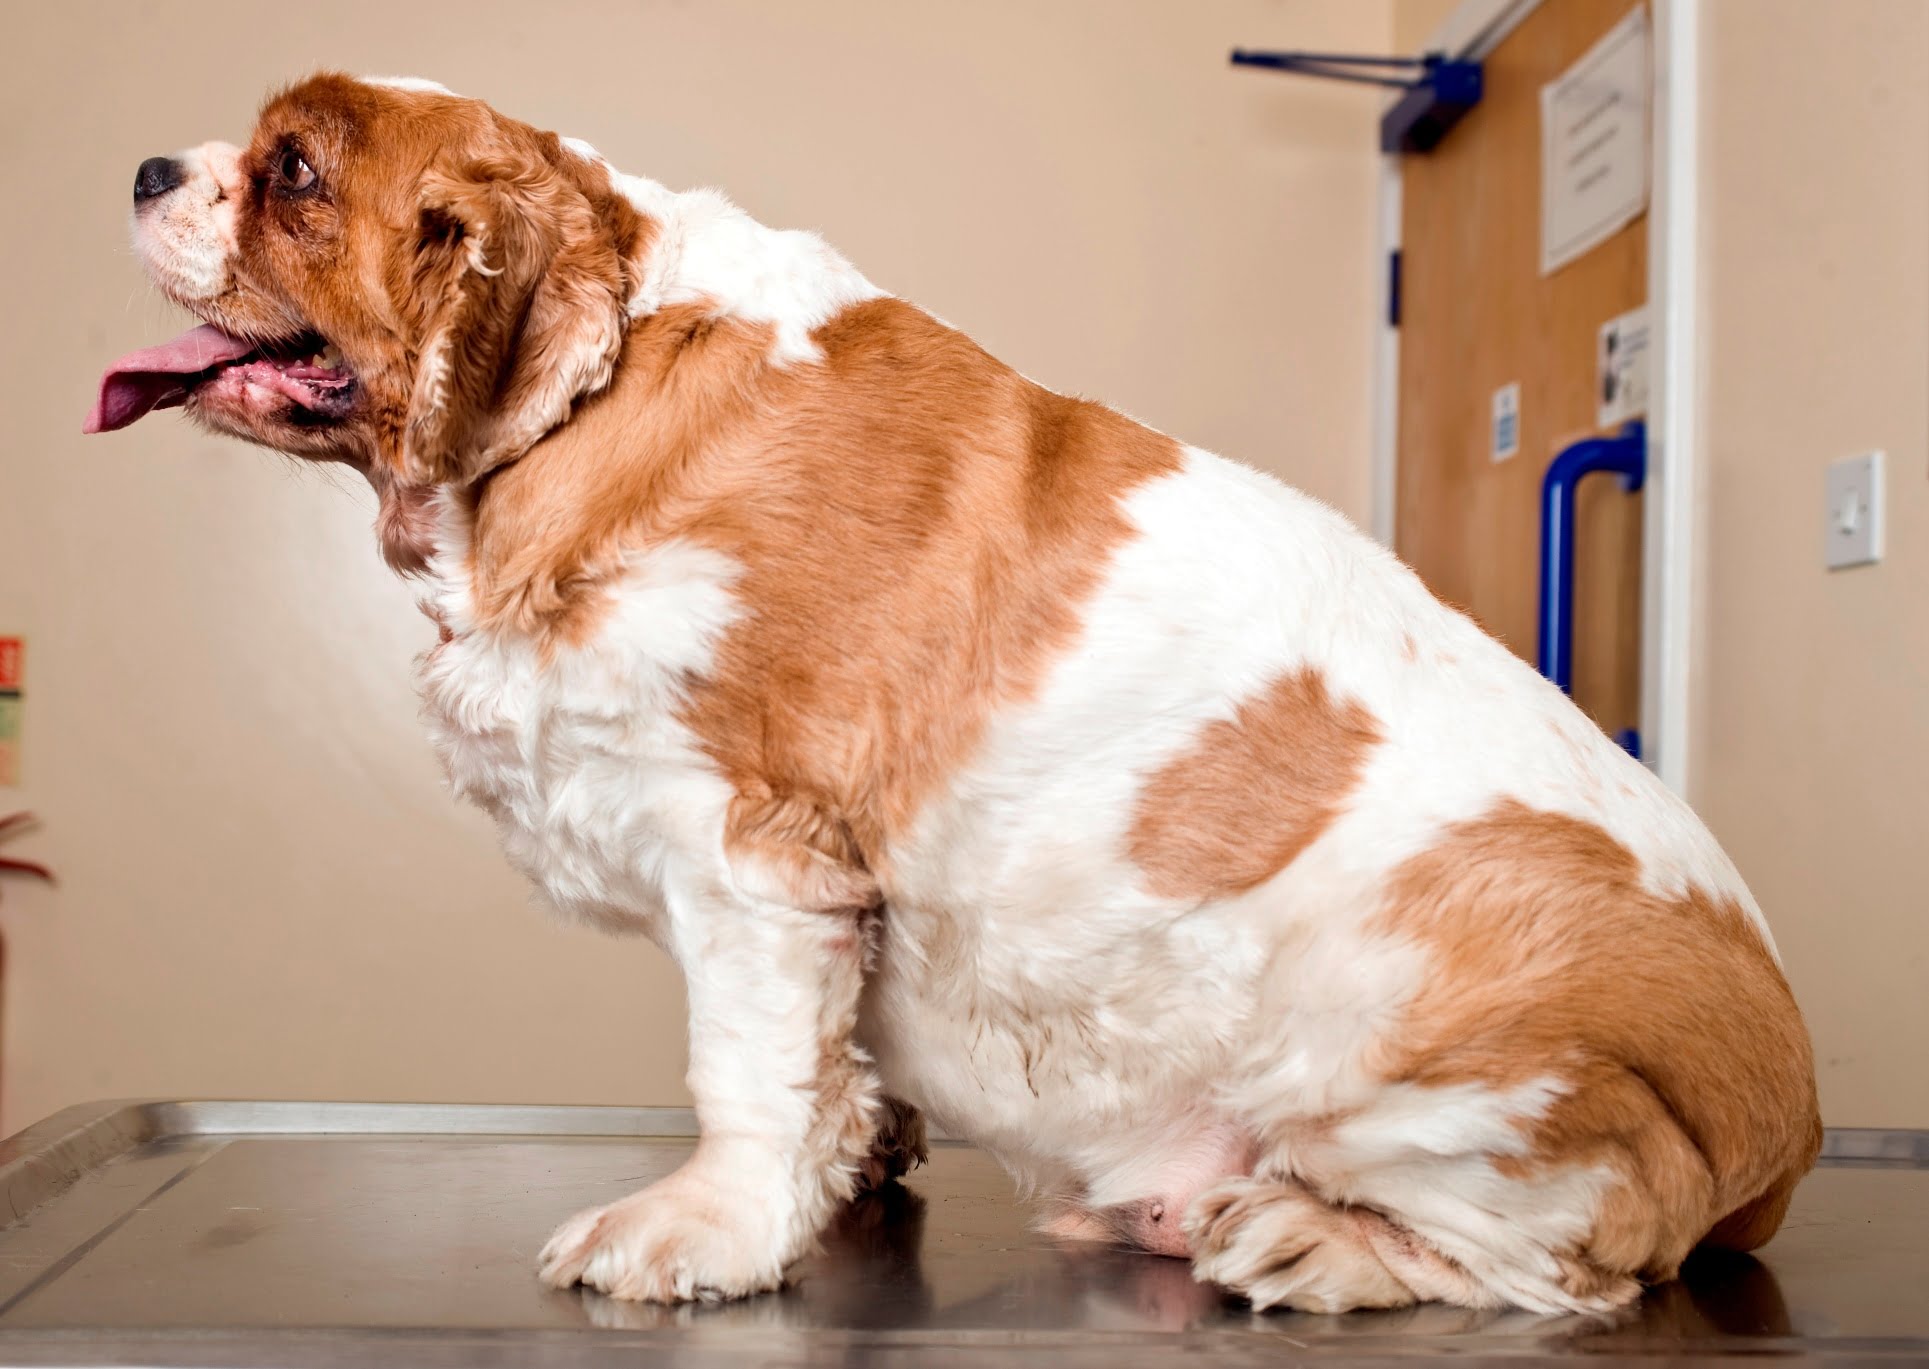 Evcil hayvanlarda obezite riski; hareket ve beslenmeye dikkat #2